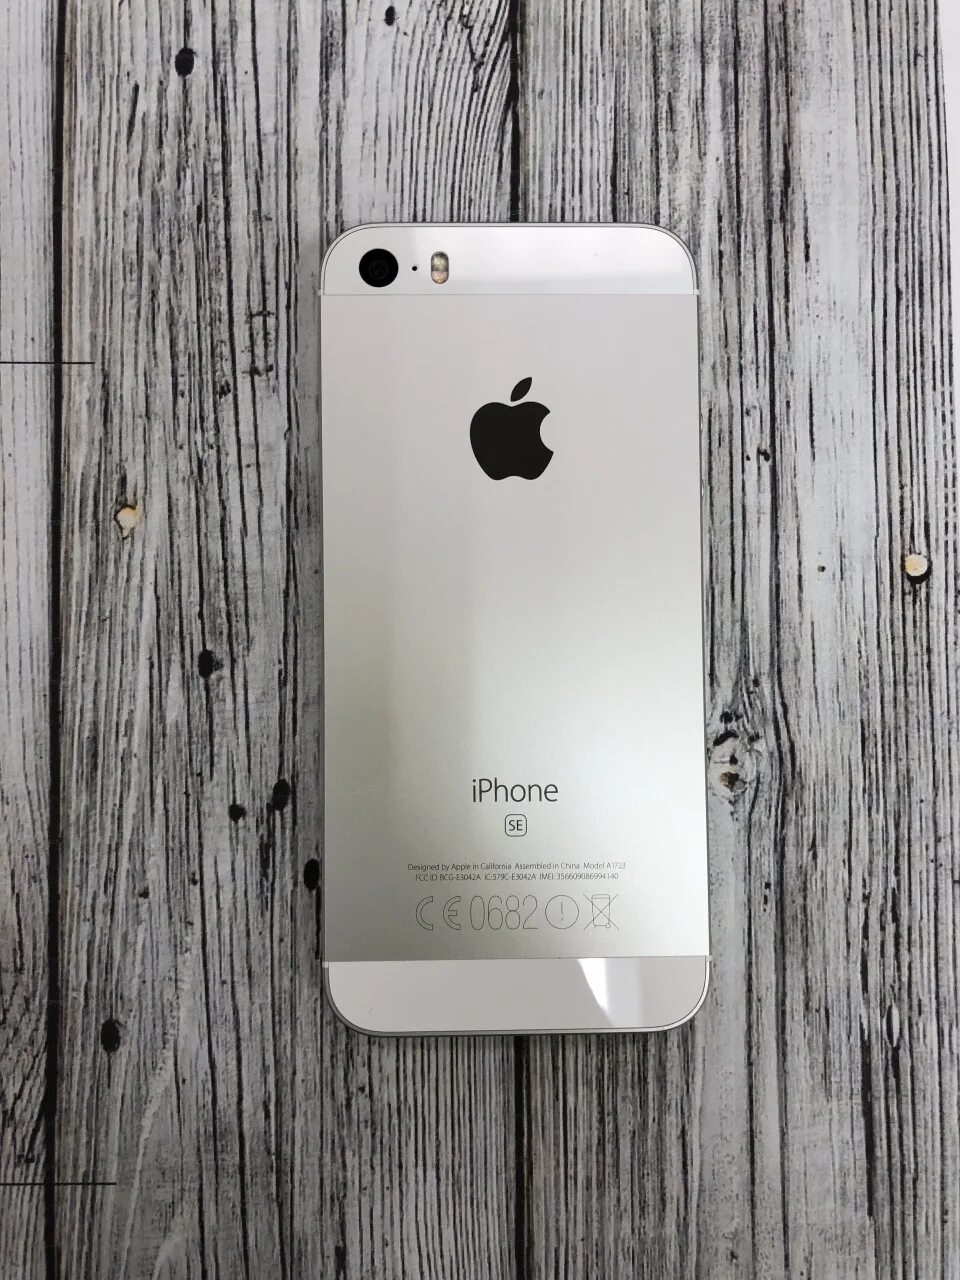 Купить новый старый айфон. Apple iphone se 32gb Silver. Iphone se 2016 белый. Iphone se 1 белый. Iphone se 2016 Silver.